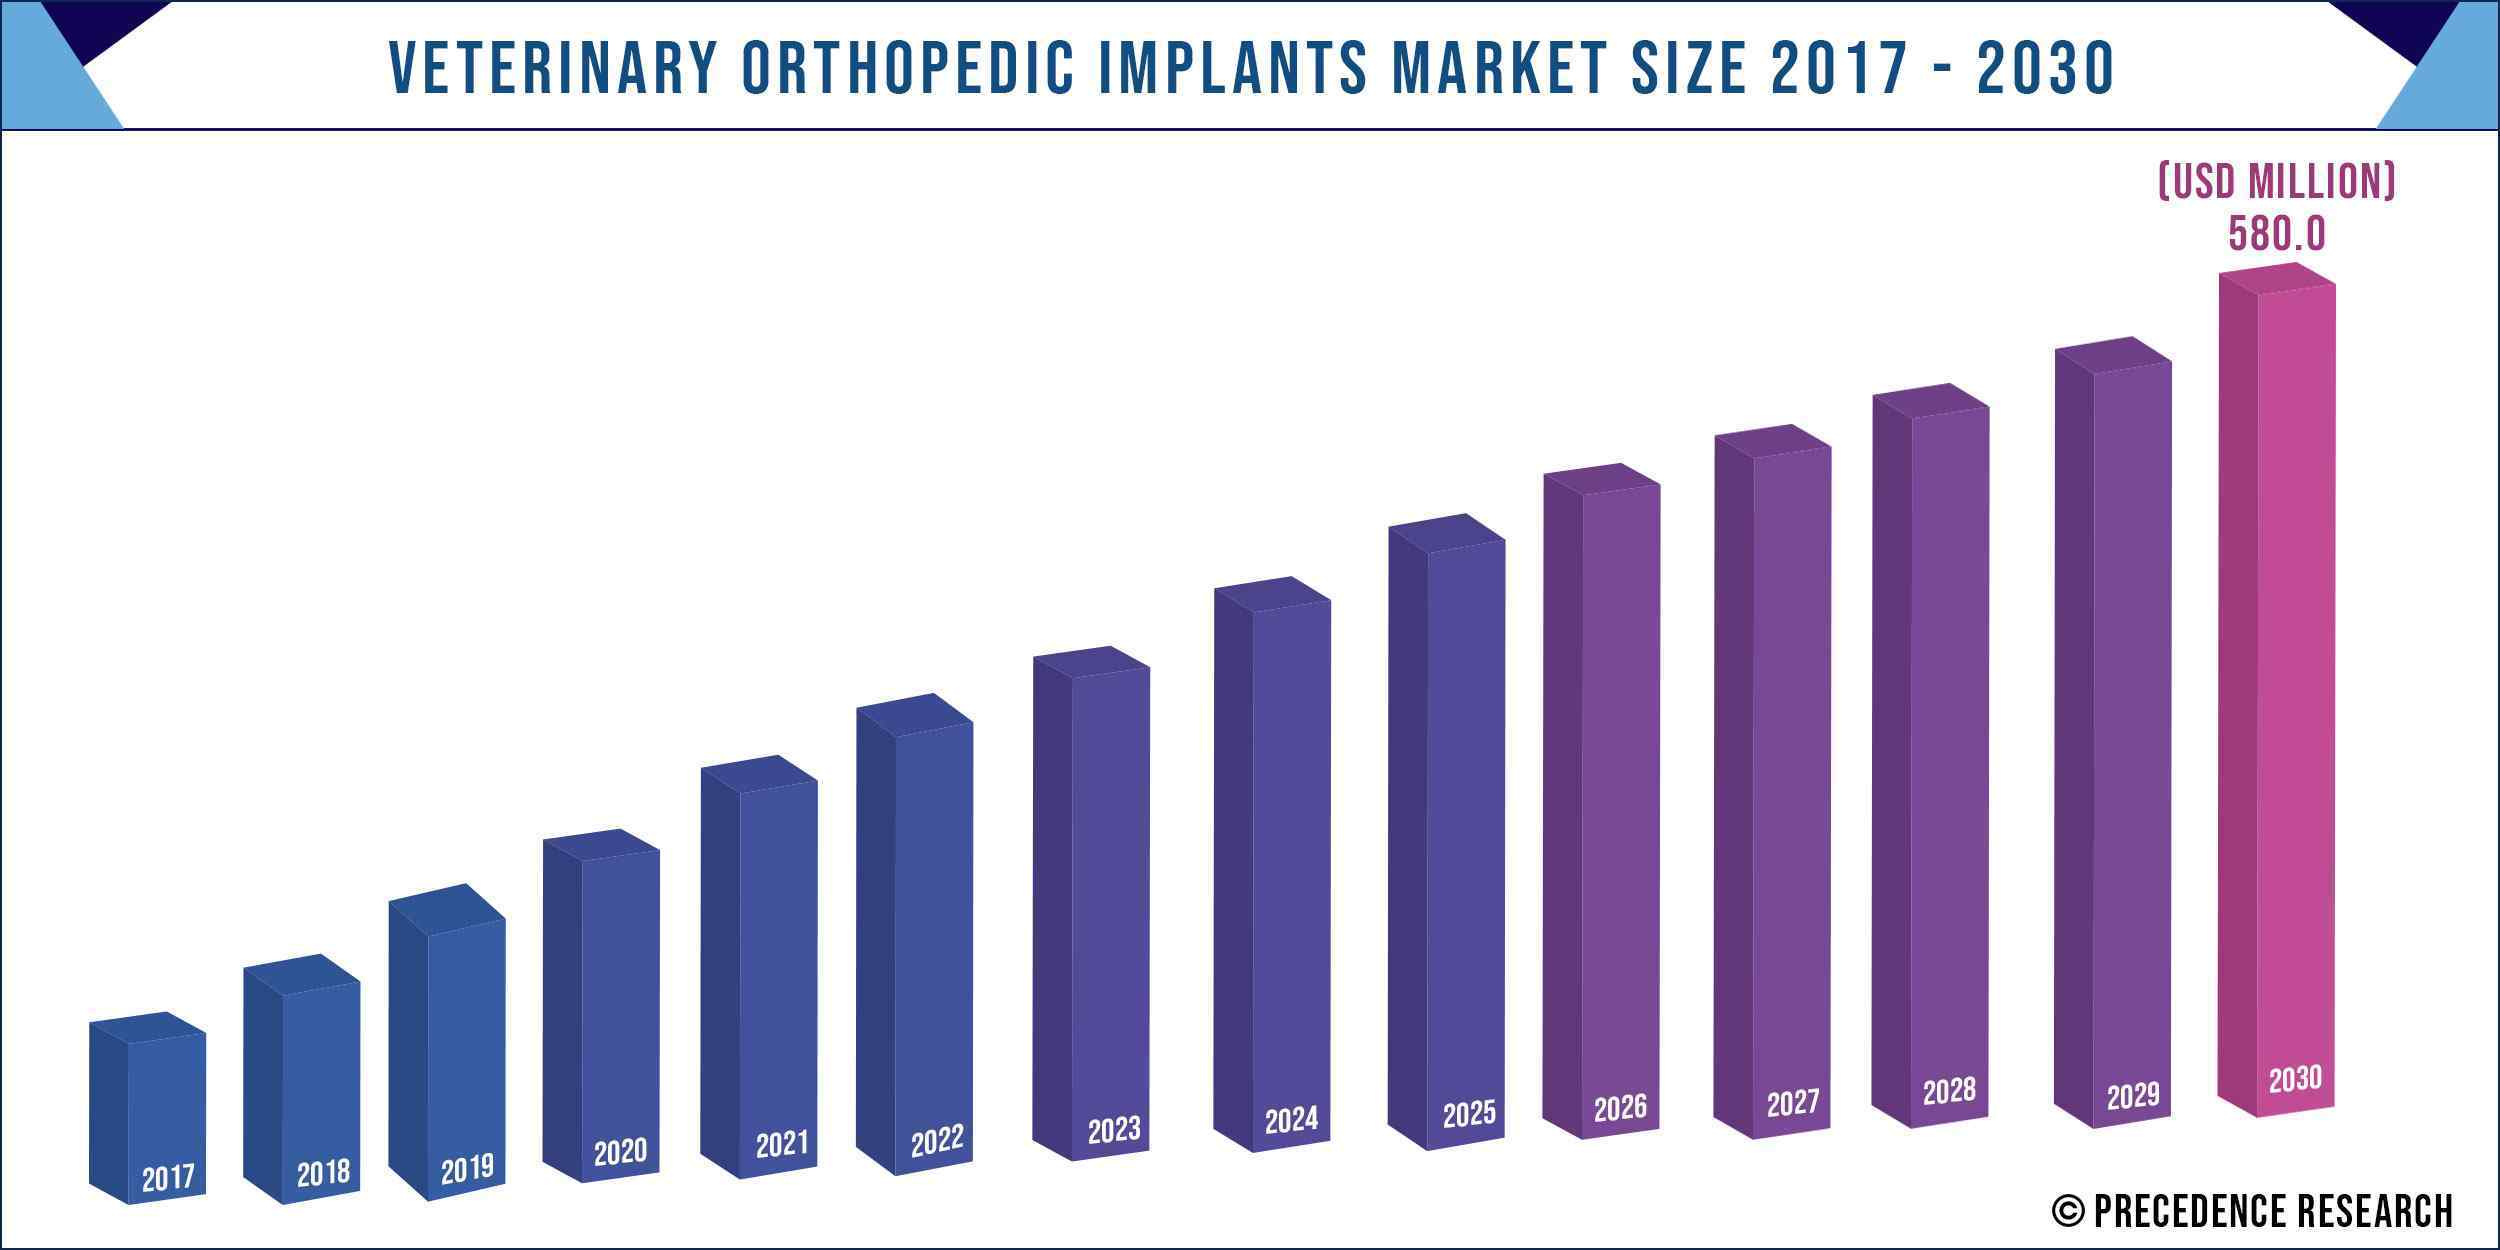 Veterinary Orthopedic Implants Market Size 2017-2030